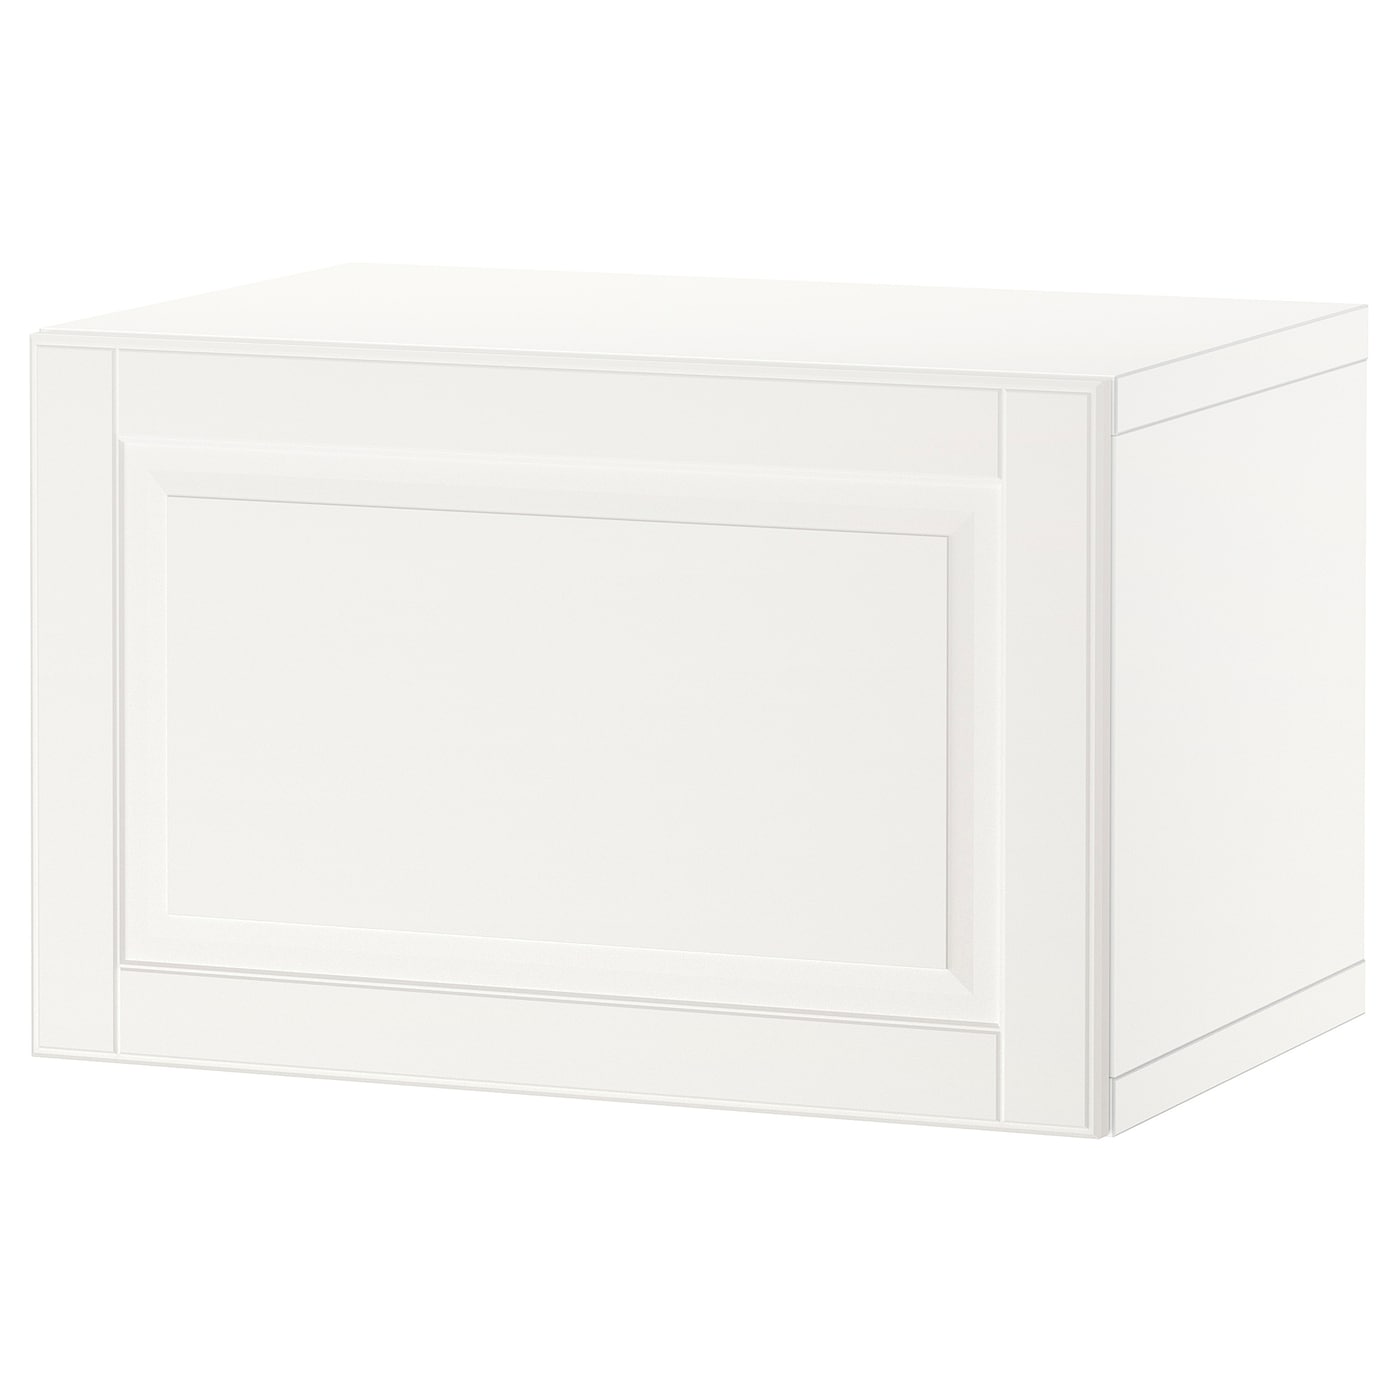 Навесной шкаф - IKEA BESTÅ/BESTA, 60x42x38 см, белый, БЕСТО ИКЕА